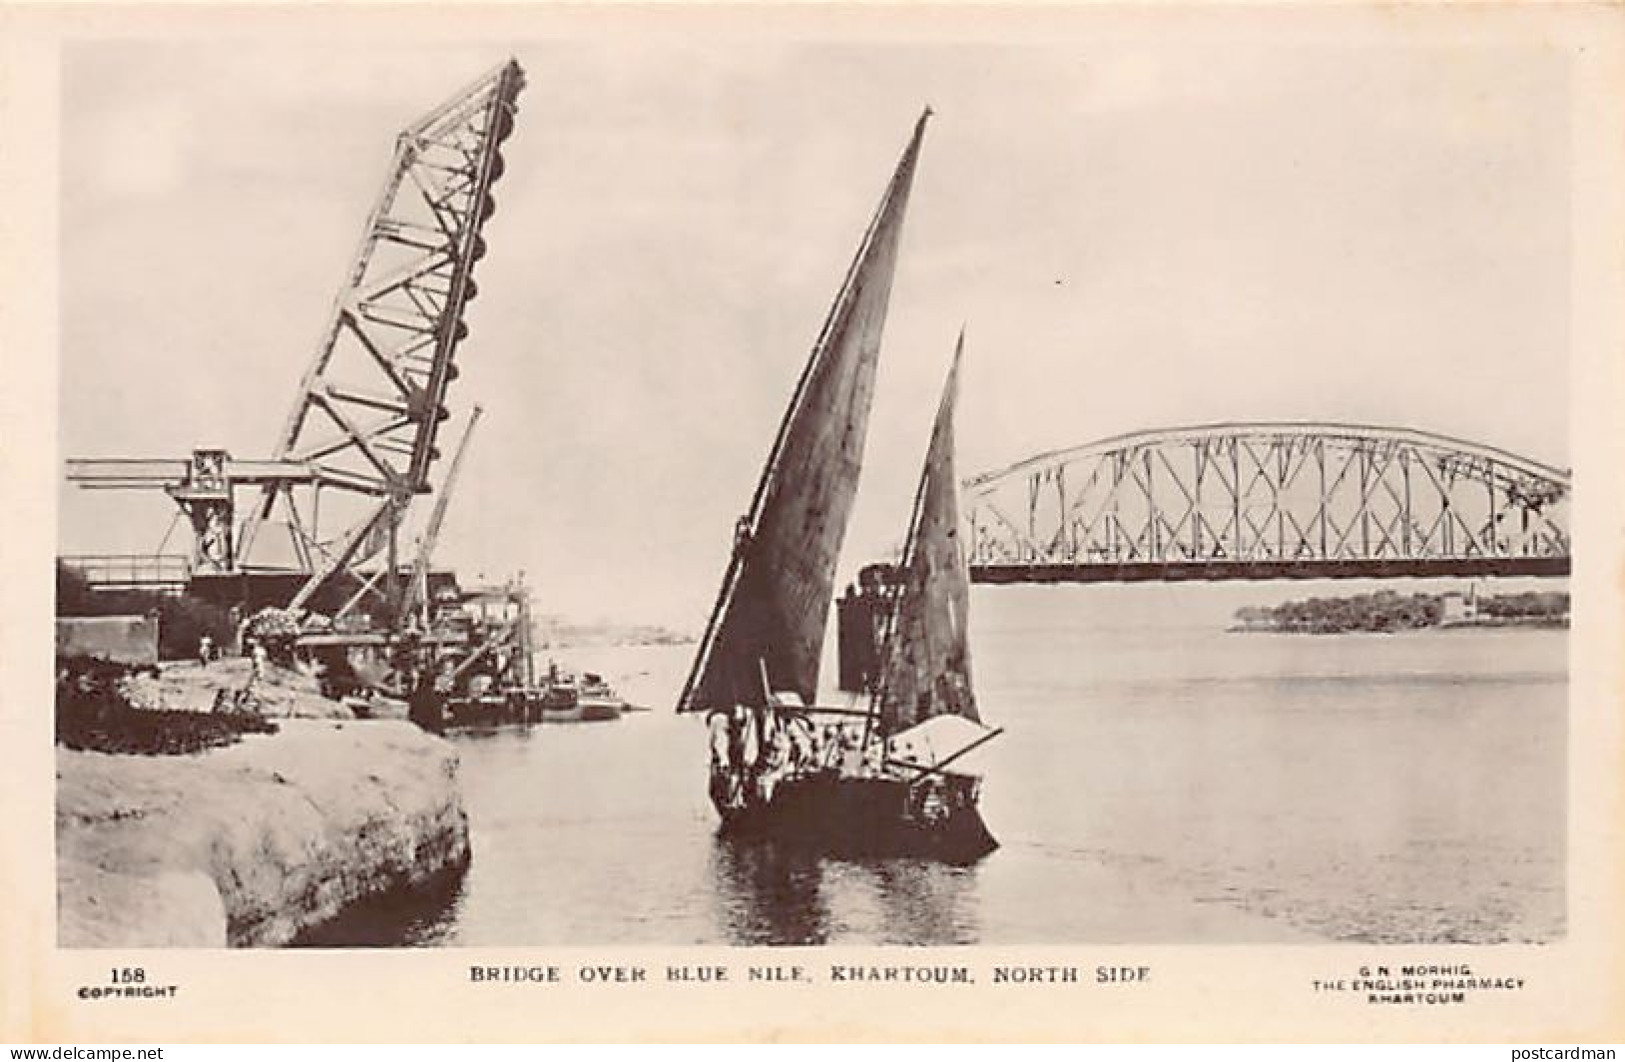 Sudan - KHARTOUM - Bridge Over Blue Nile, North Side - Publ. G. N. Morhig 158 - Soudan